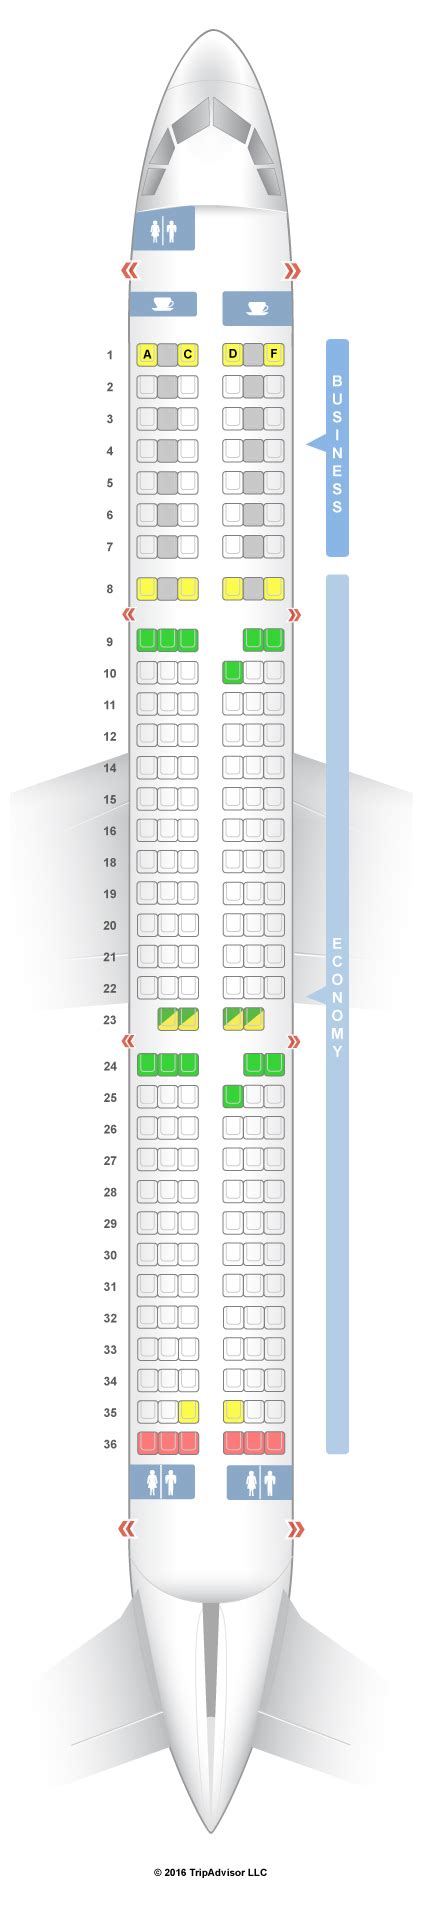 Seatguru Seat Map Alitalia Airbus A321 321 Layout 2